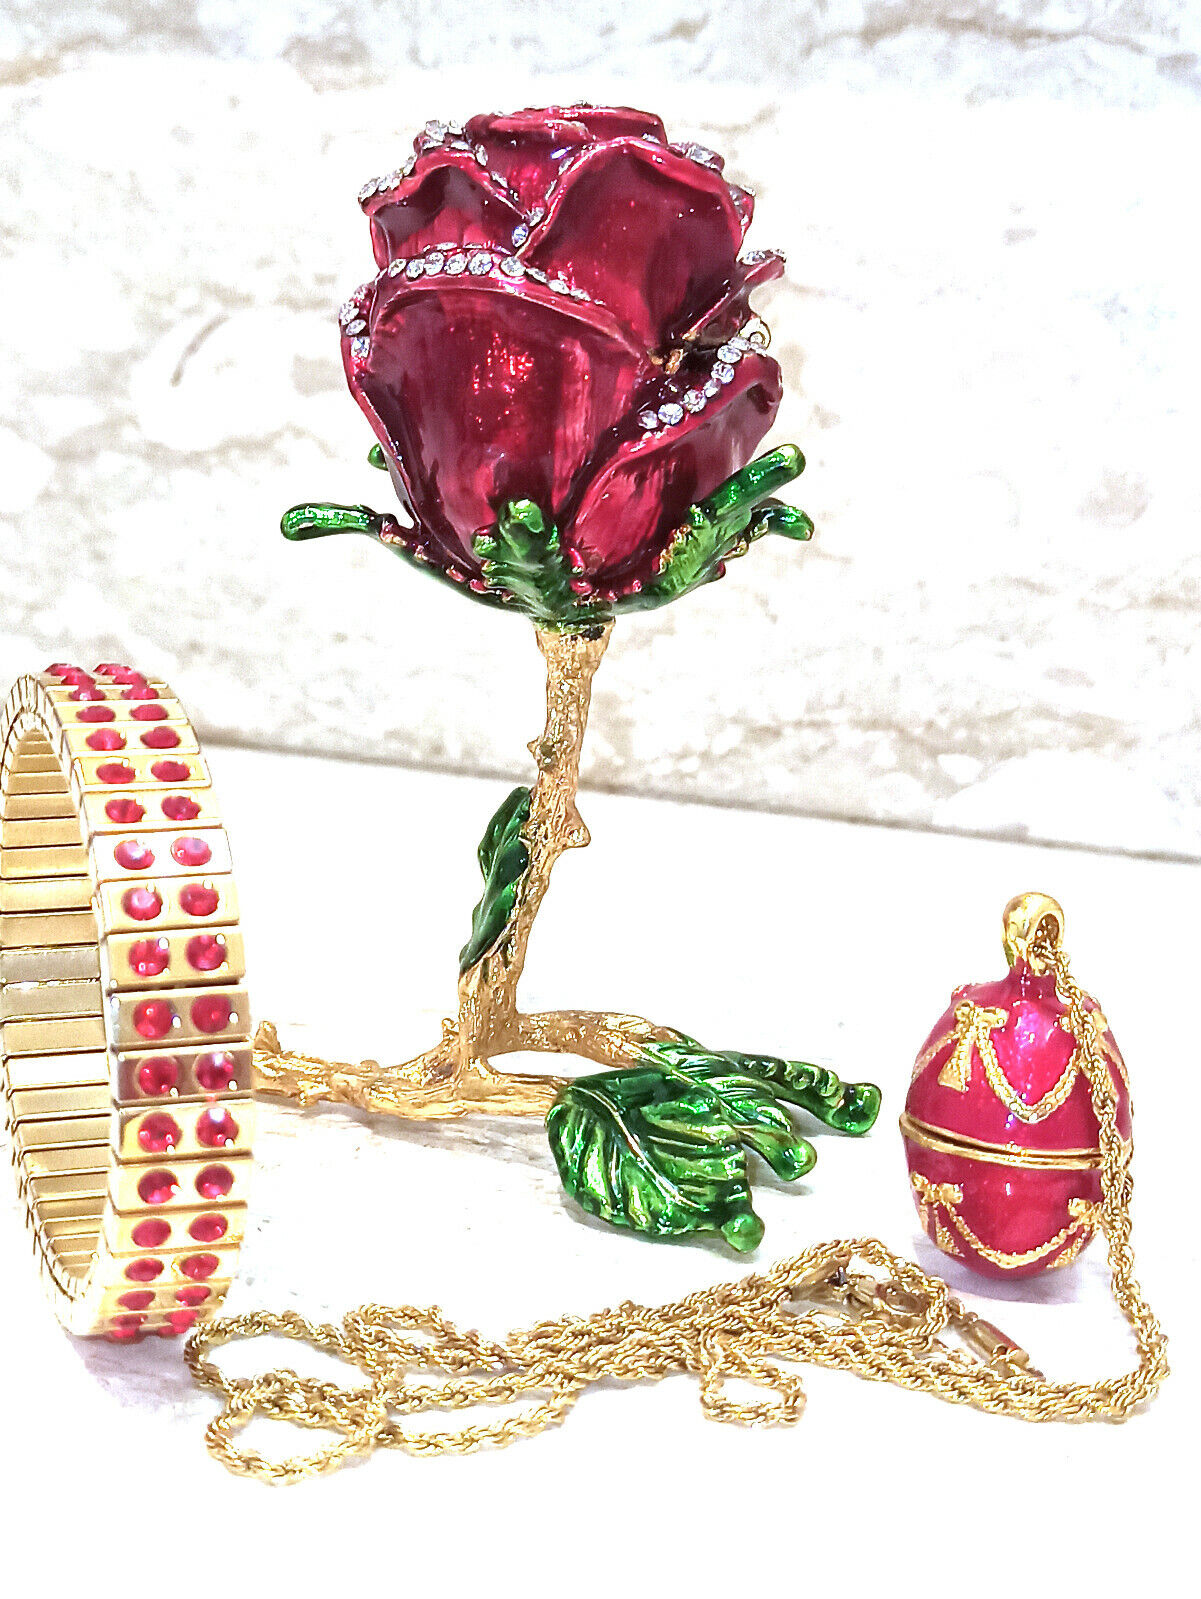 Girlfriend Birthday gift Fabergé  Faberge egg Jewelry SET HANDMADE 24K GOLD RUBY